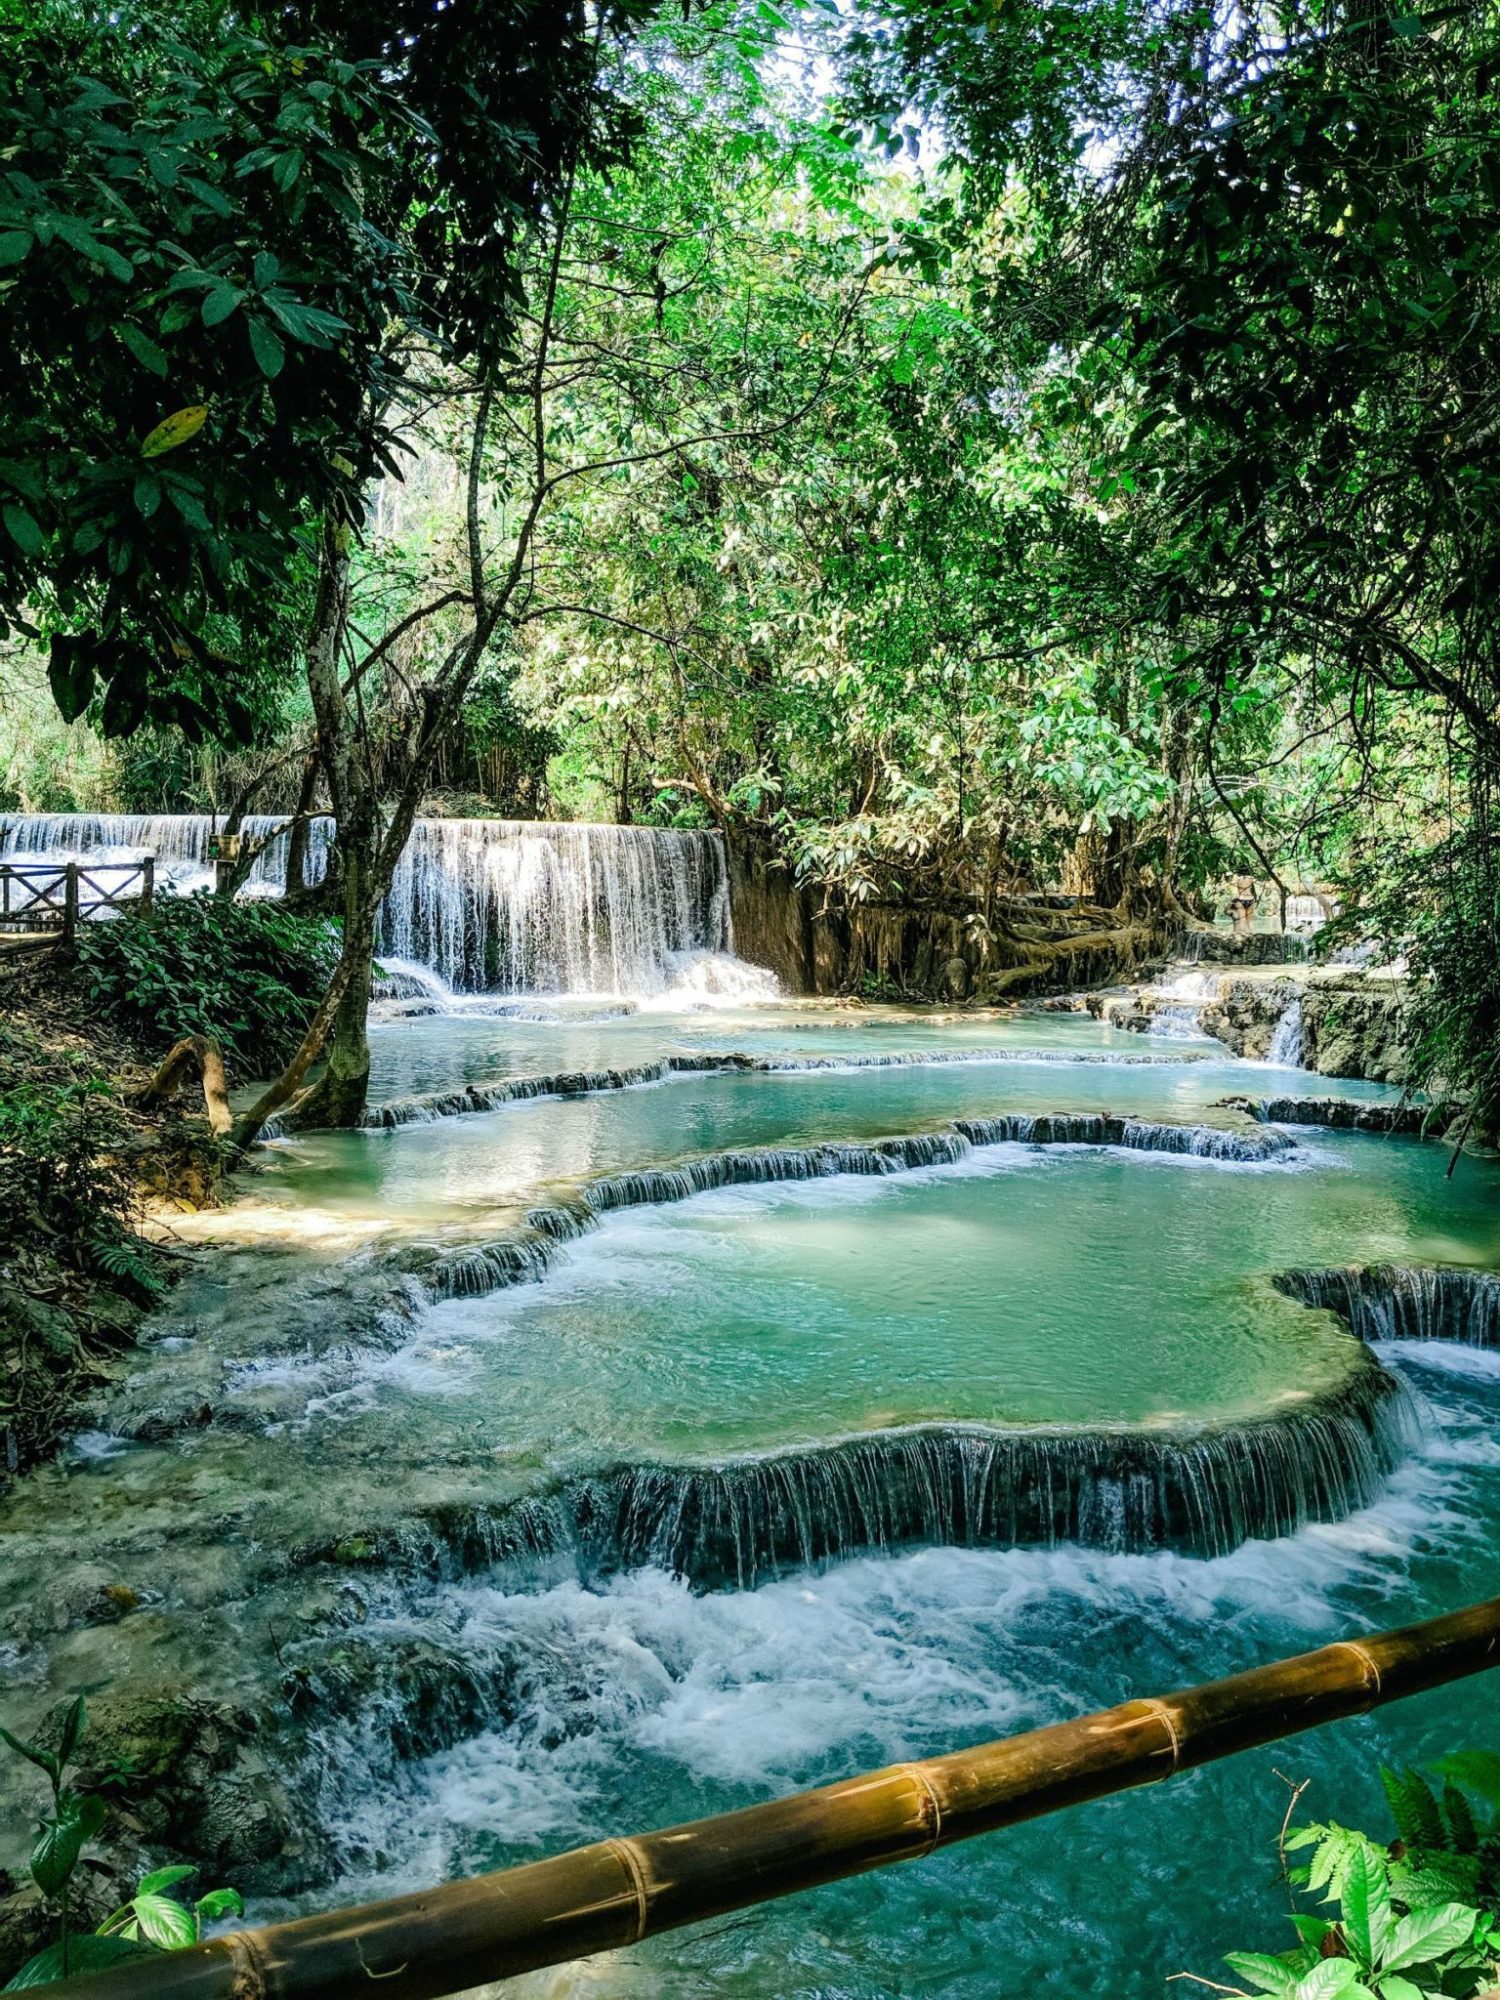 Kuang Si falls, Laos